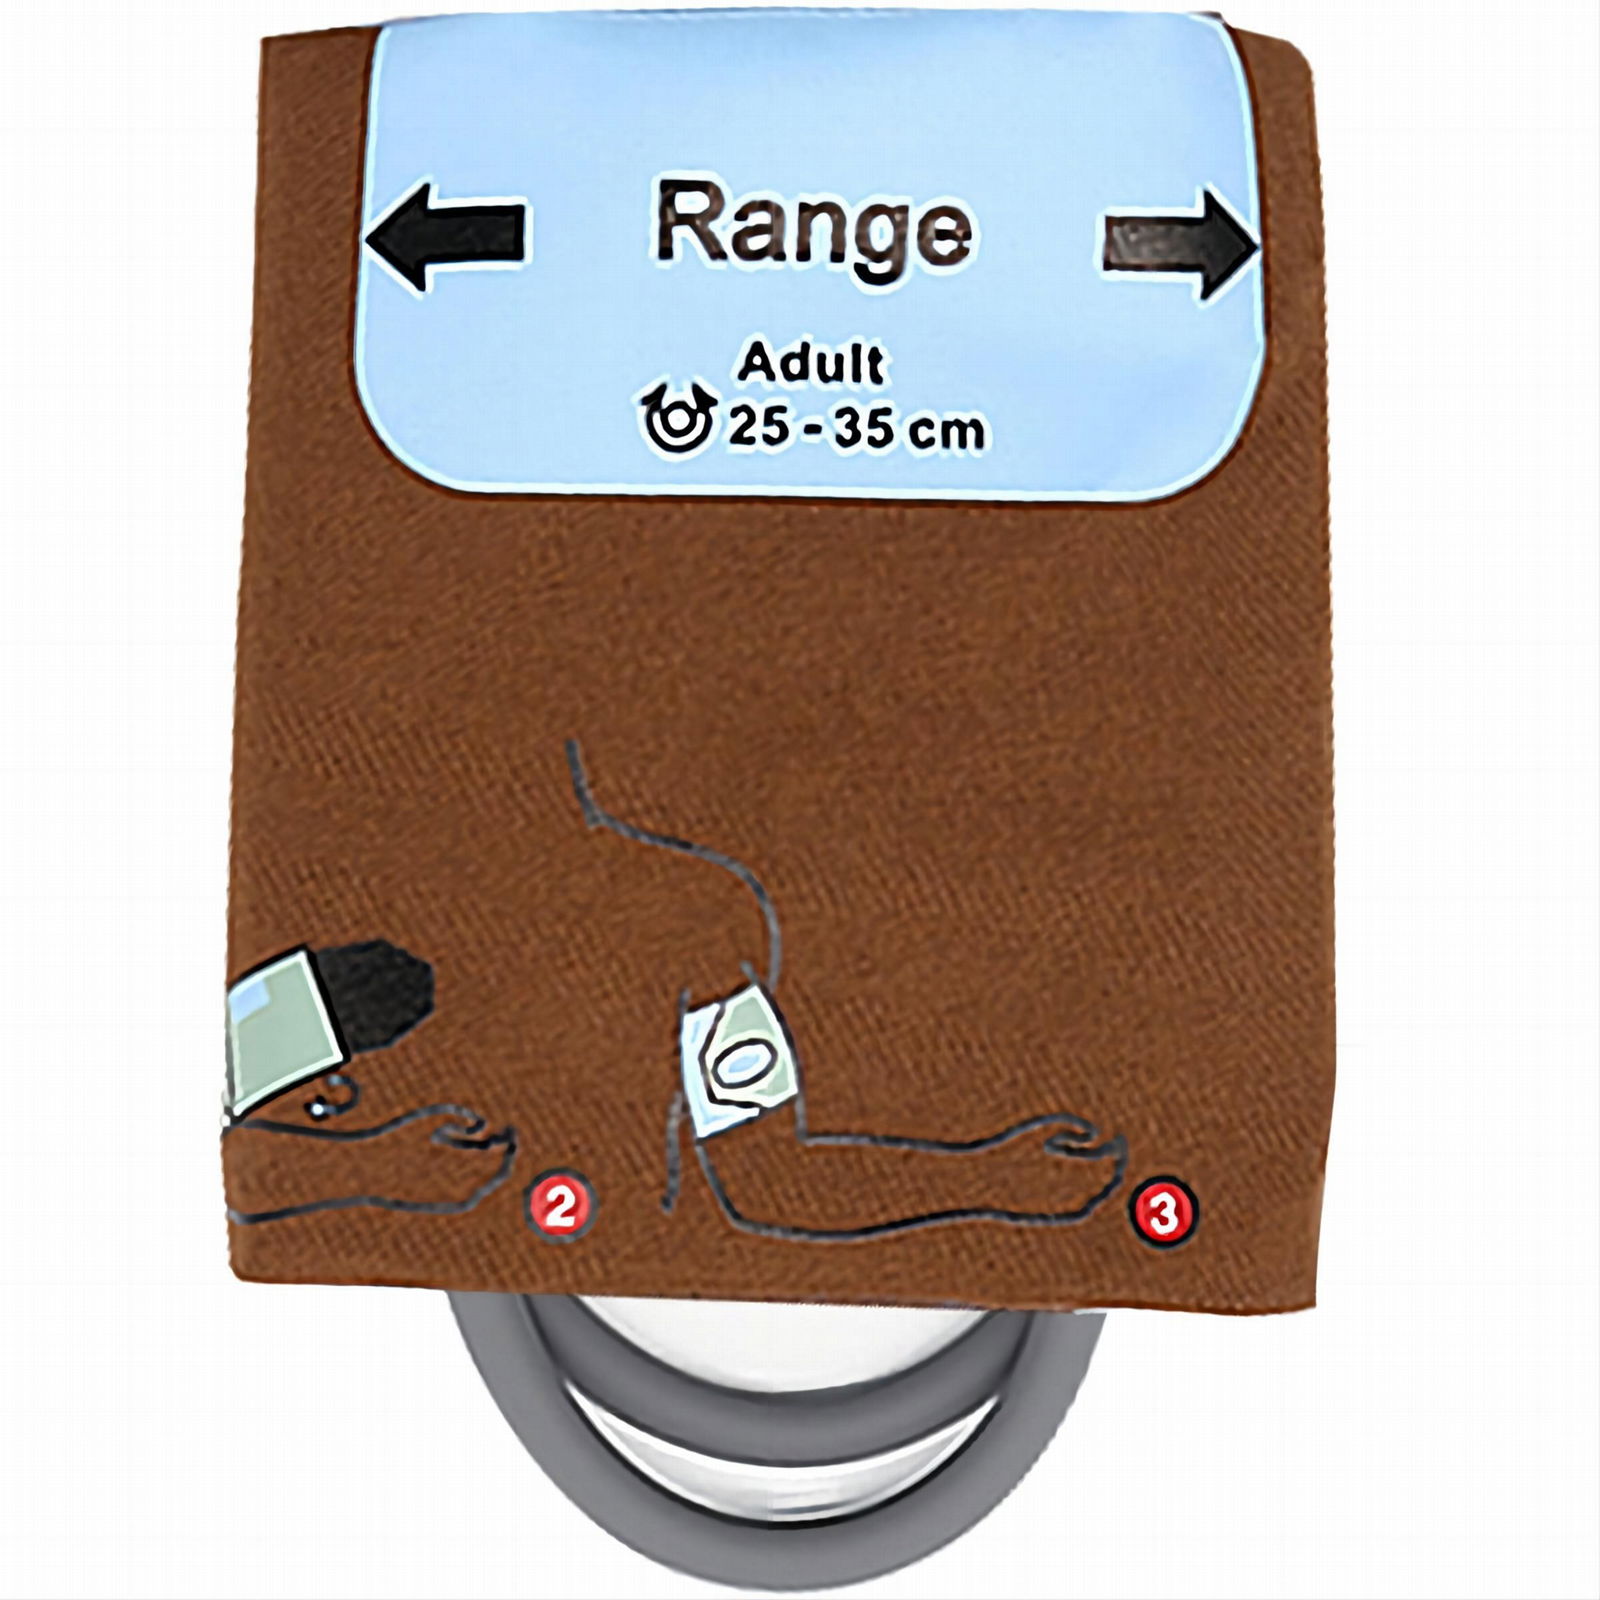 Customizable compatible ambulatory blood pressure cuff for adult single tube